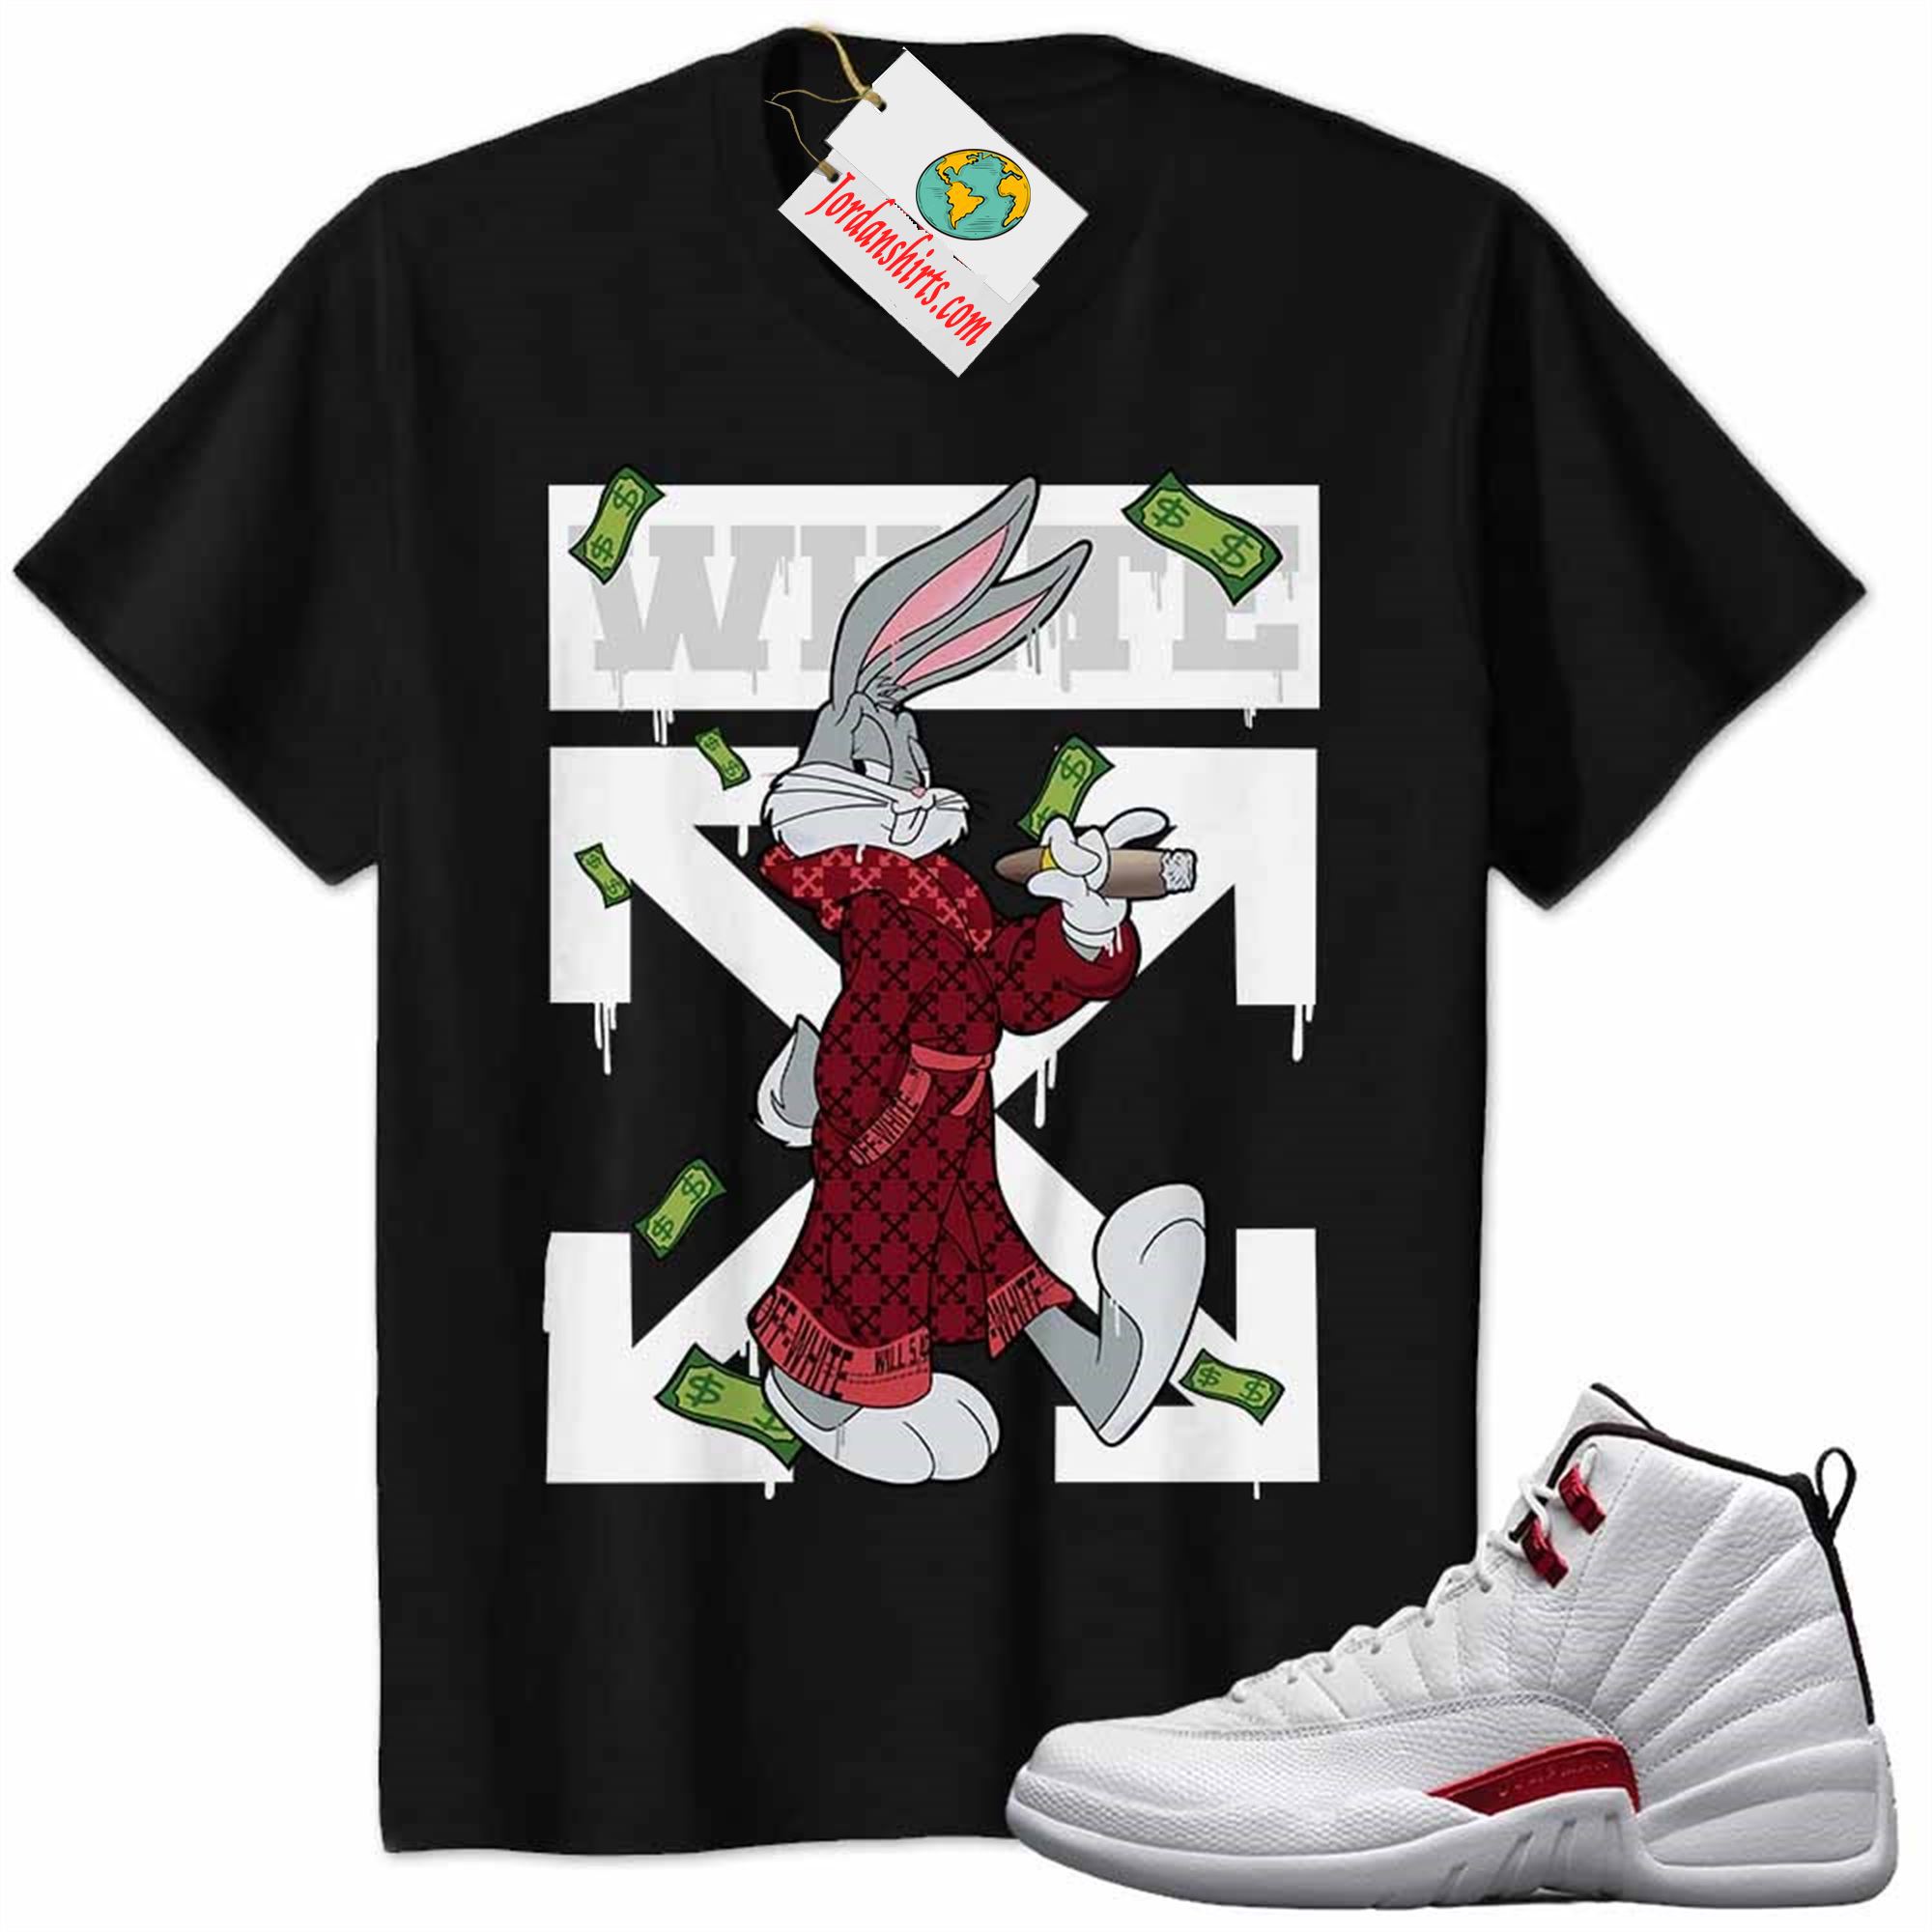 Jordan 12 Shirt, Jordan 12 Twist Shirt Bug Bunny Smokes Weed Money Falling Black Size Up To 5xl